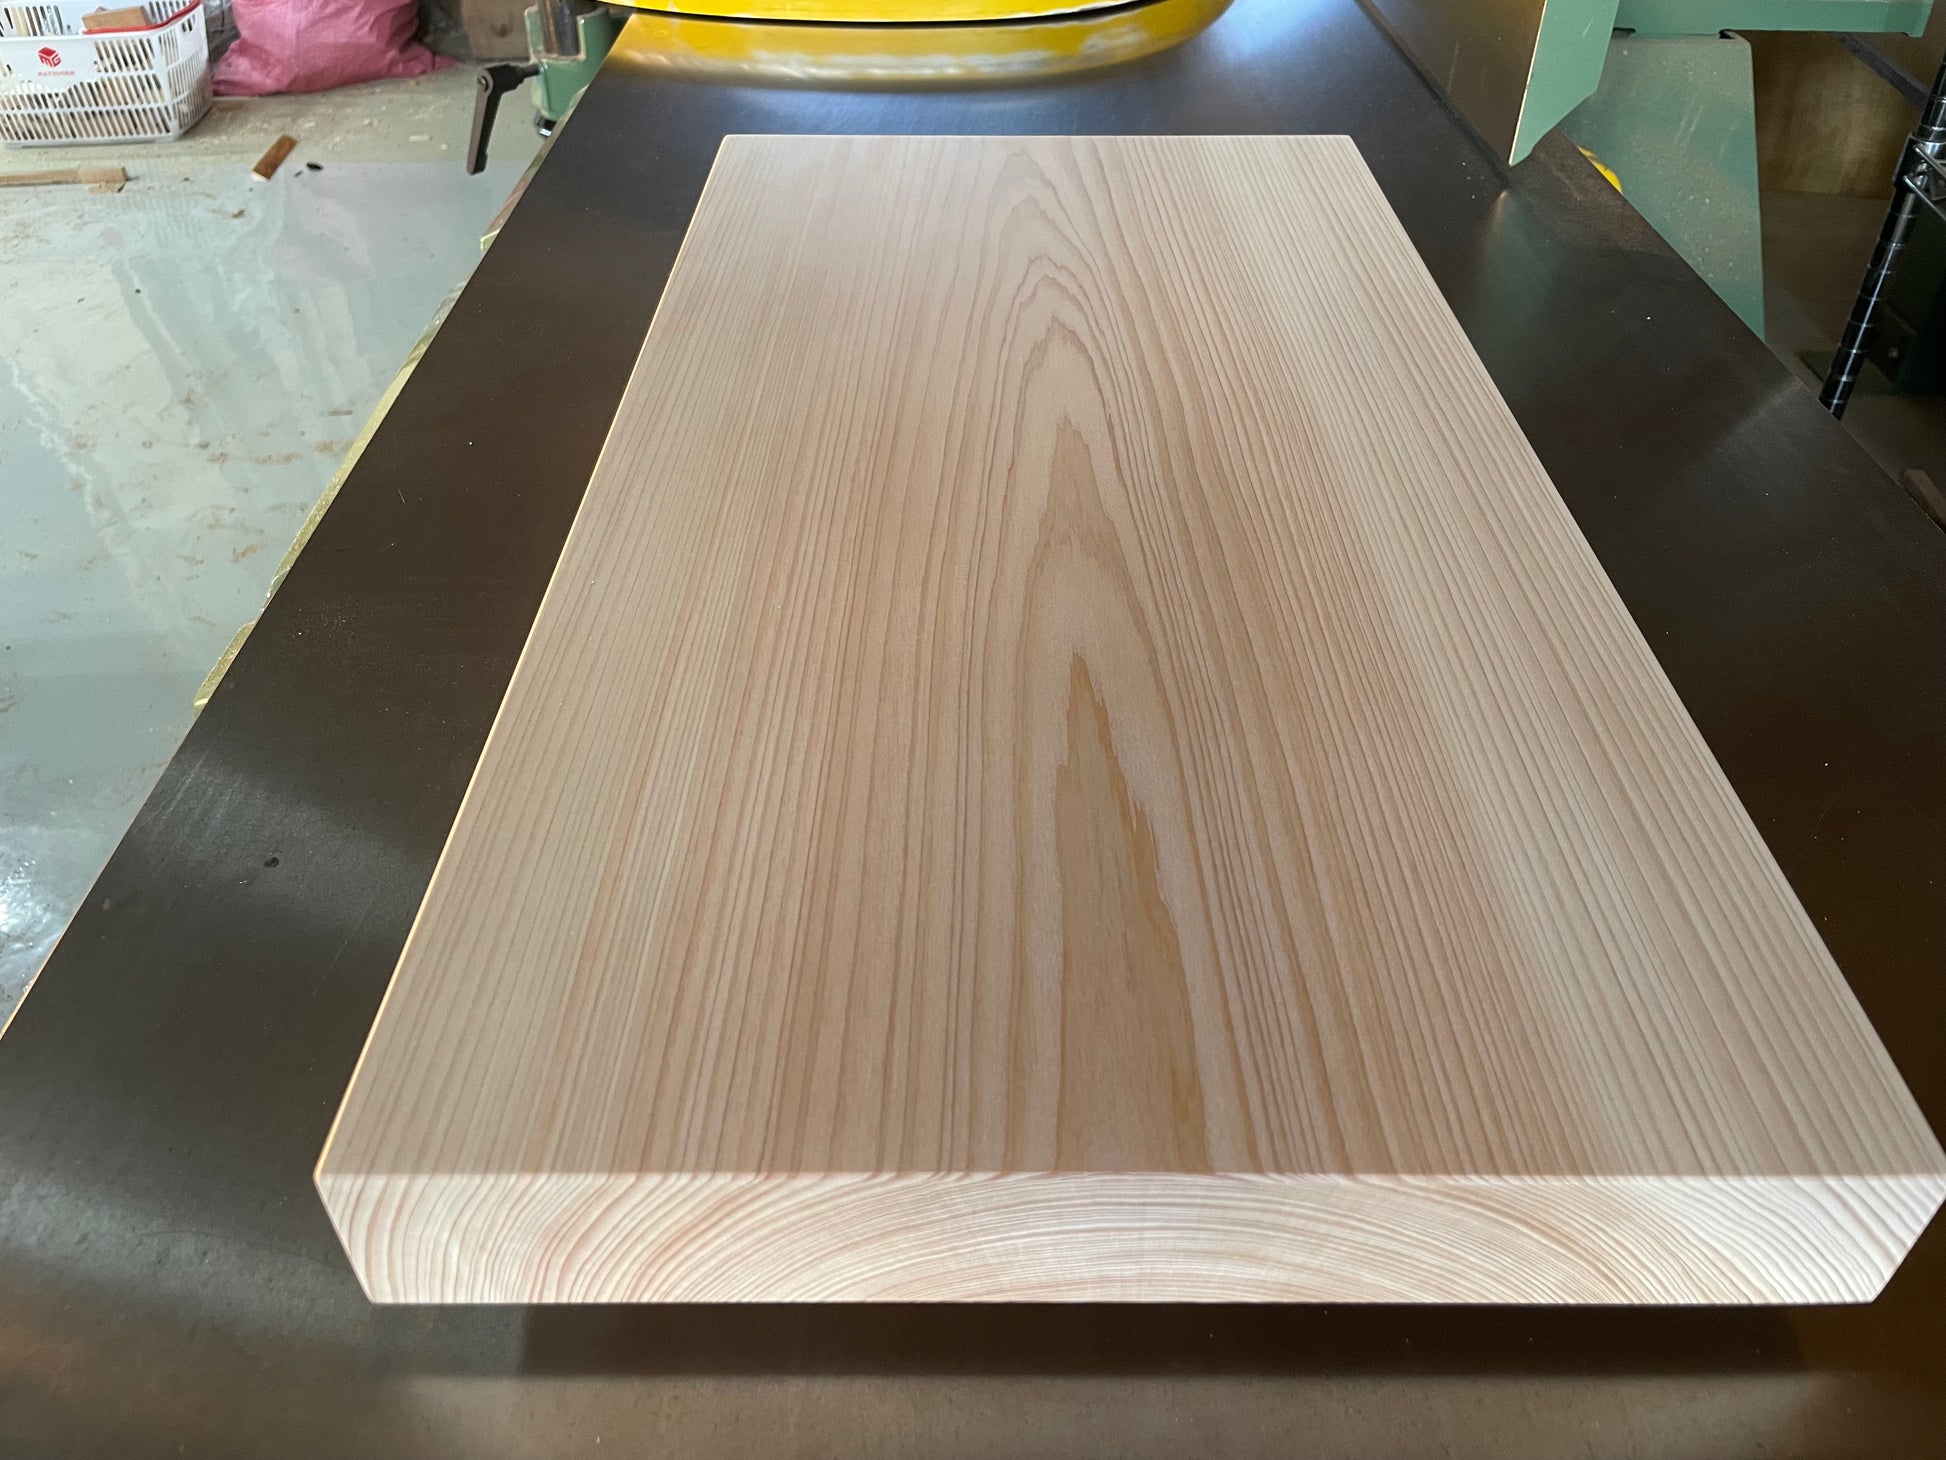 Daiwa Hinoki Cypress Cutting Board with Stand 36cm Dishwasher safe Japan  [0b5]